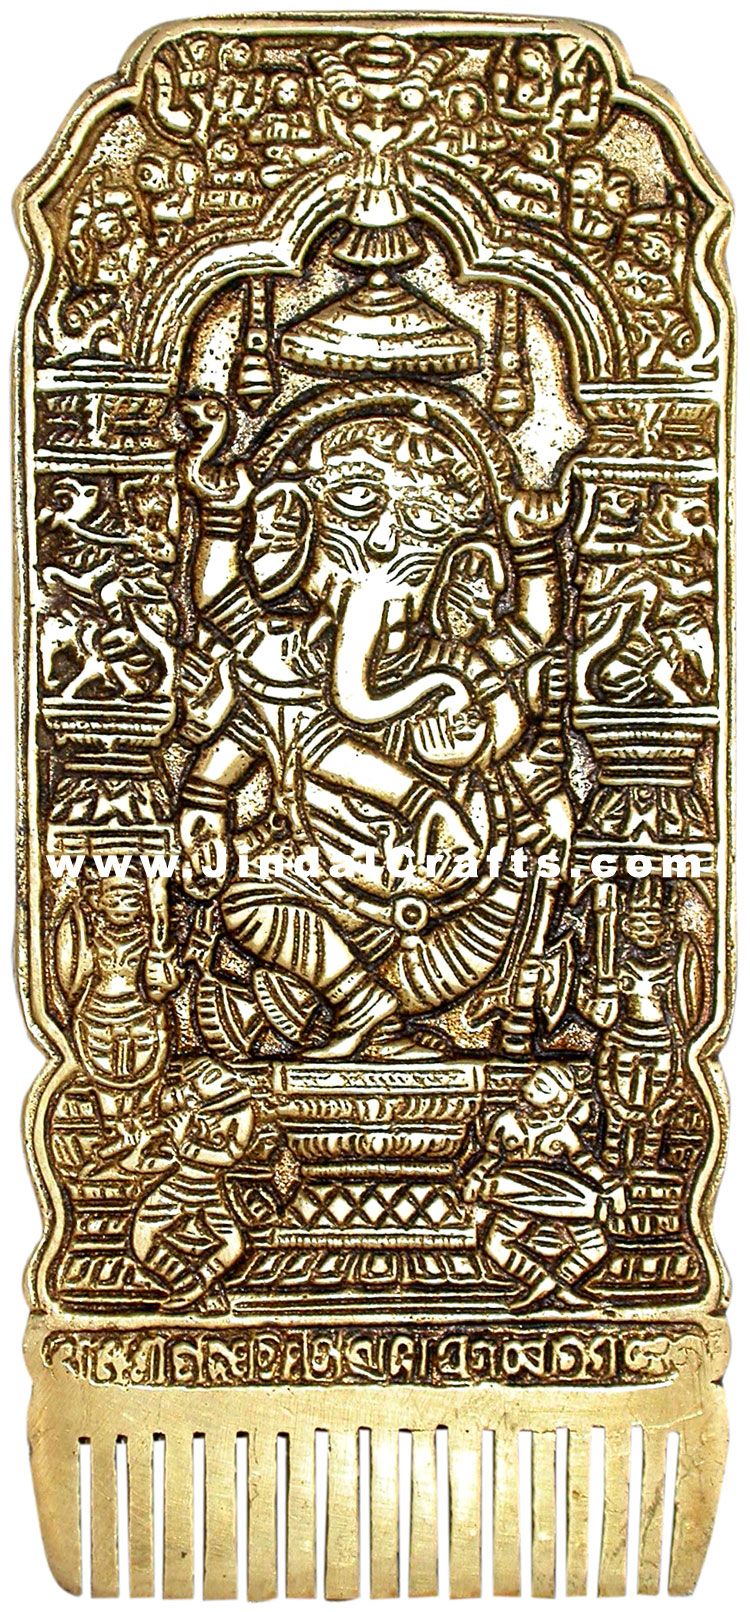 Lord Krishna Ganesha Indian God Sculpture Rare Artifact